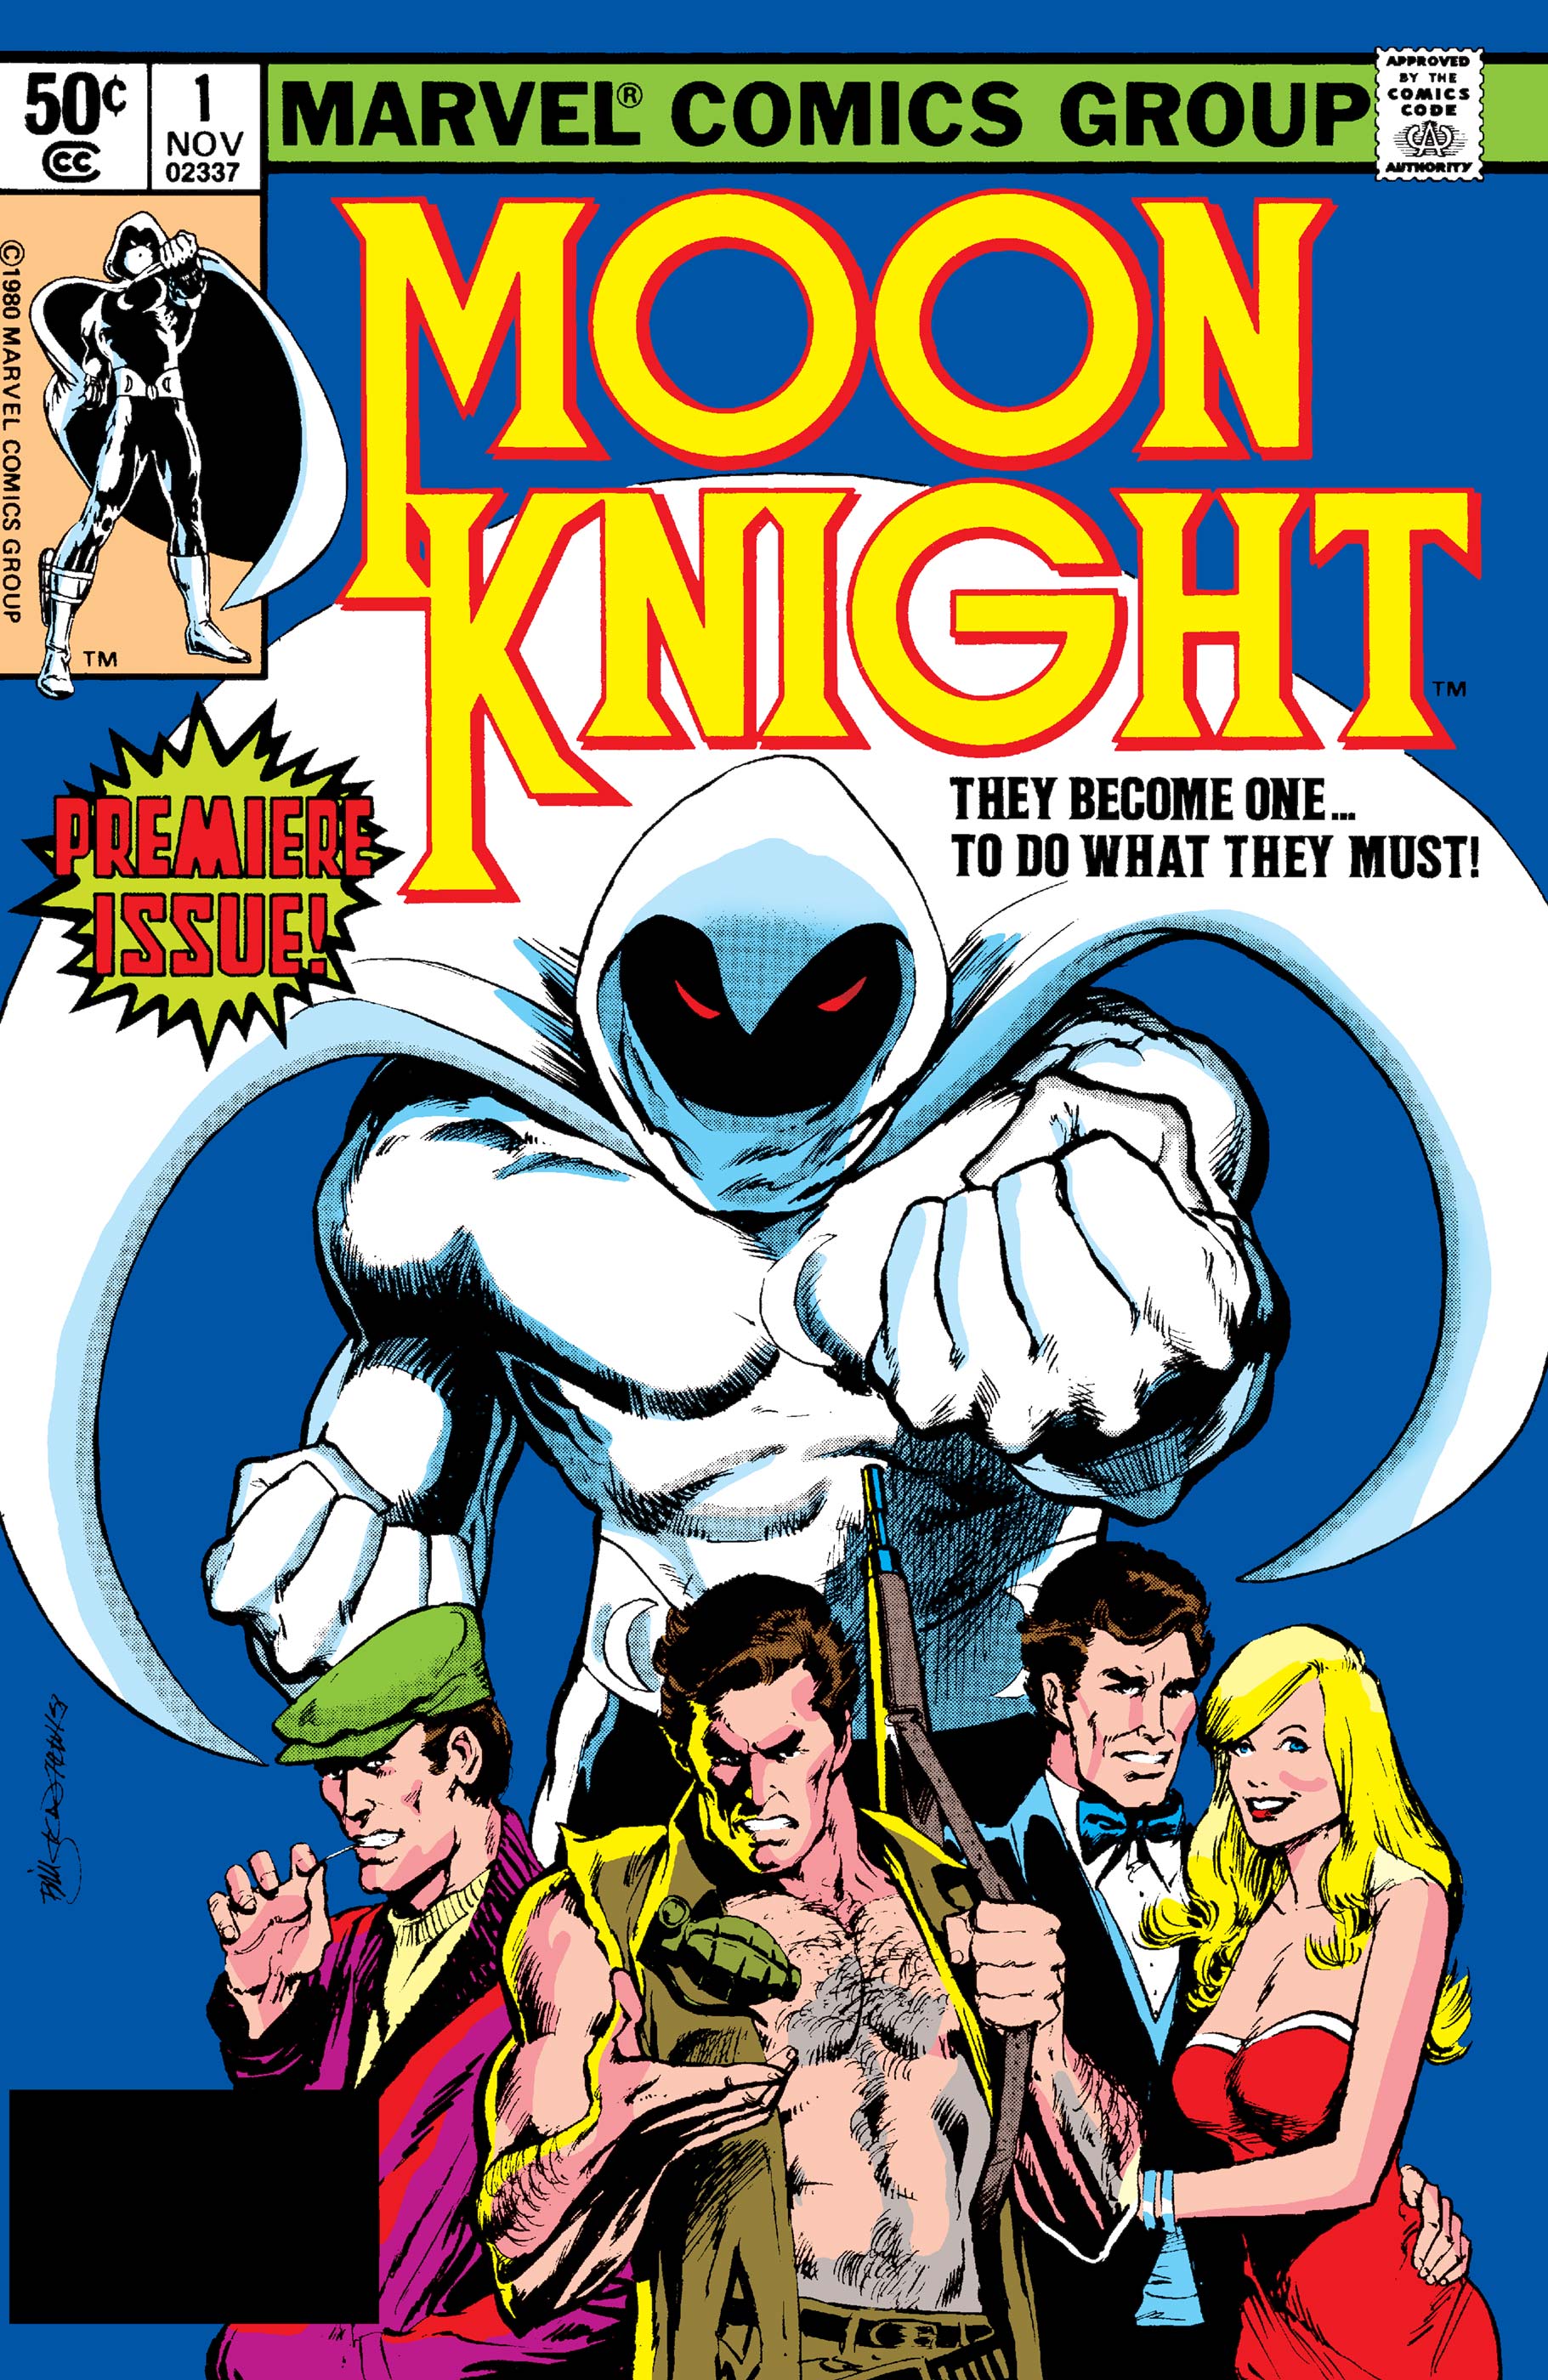 Moon knight comics read online